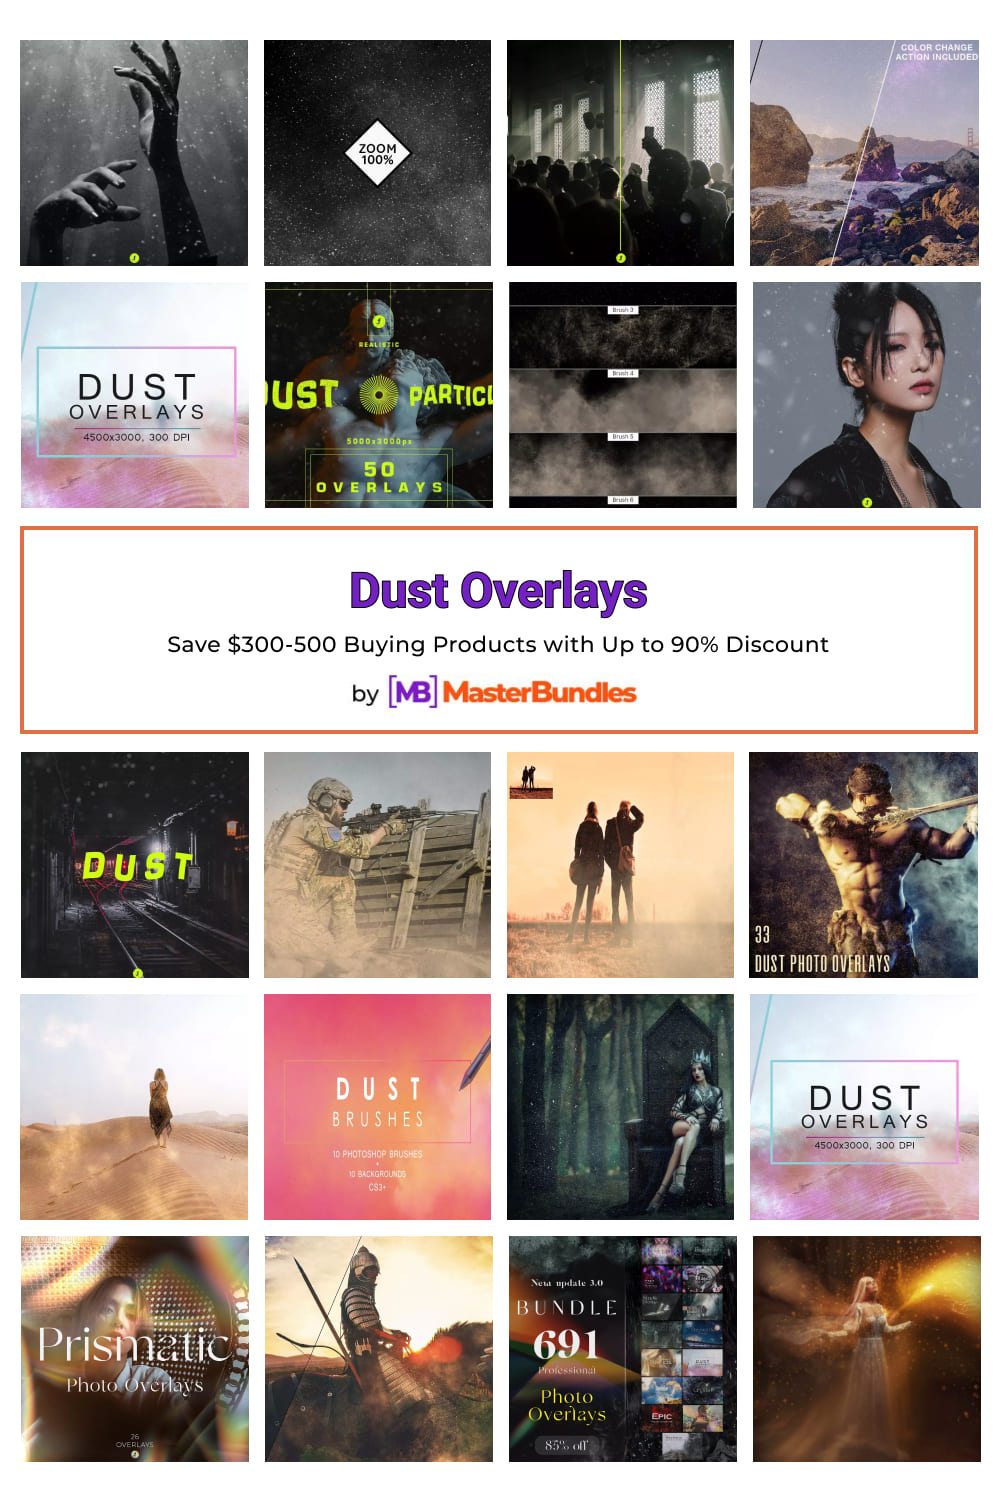 Dust Overlays Pinterest image.